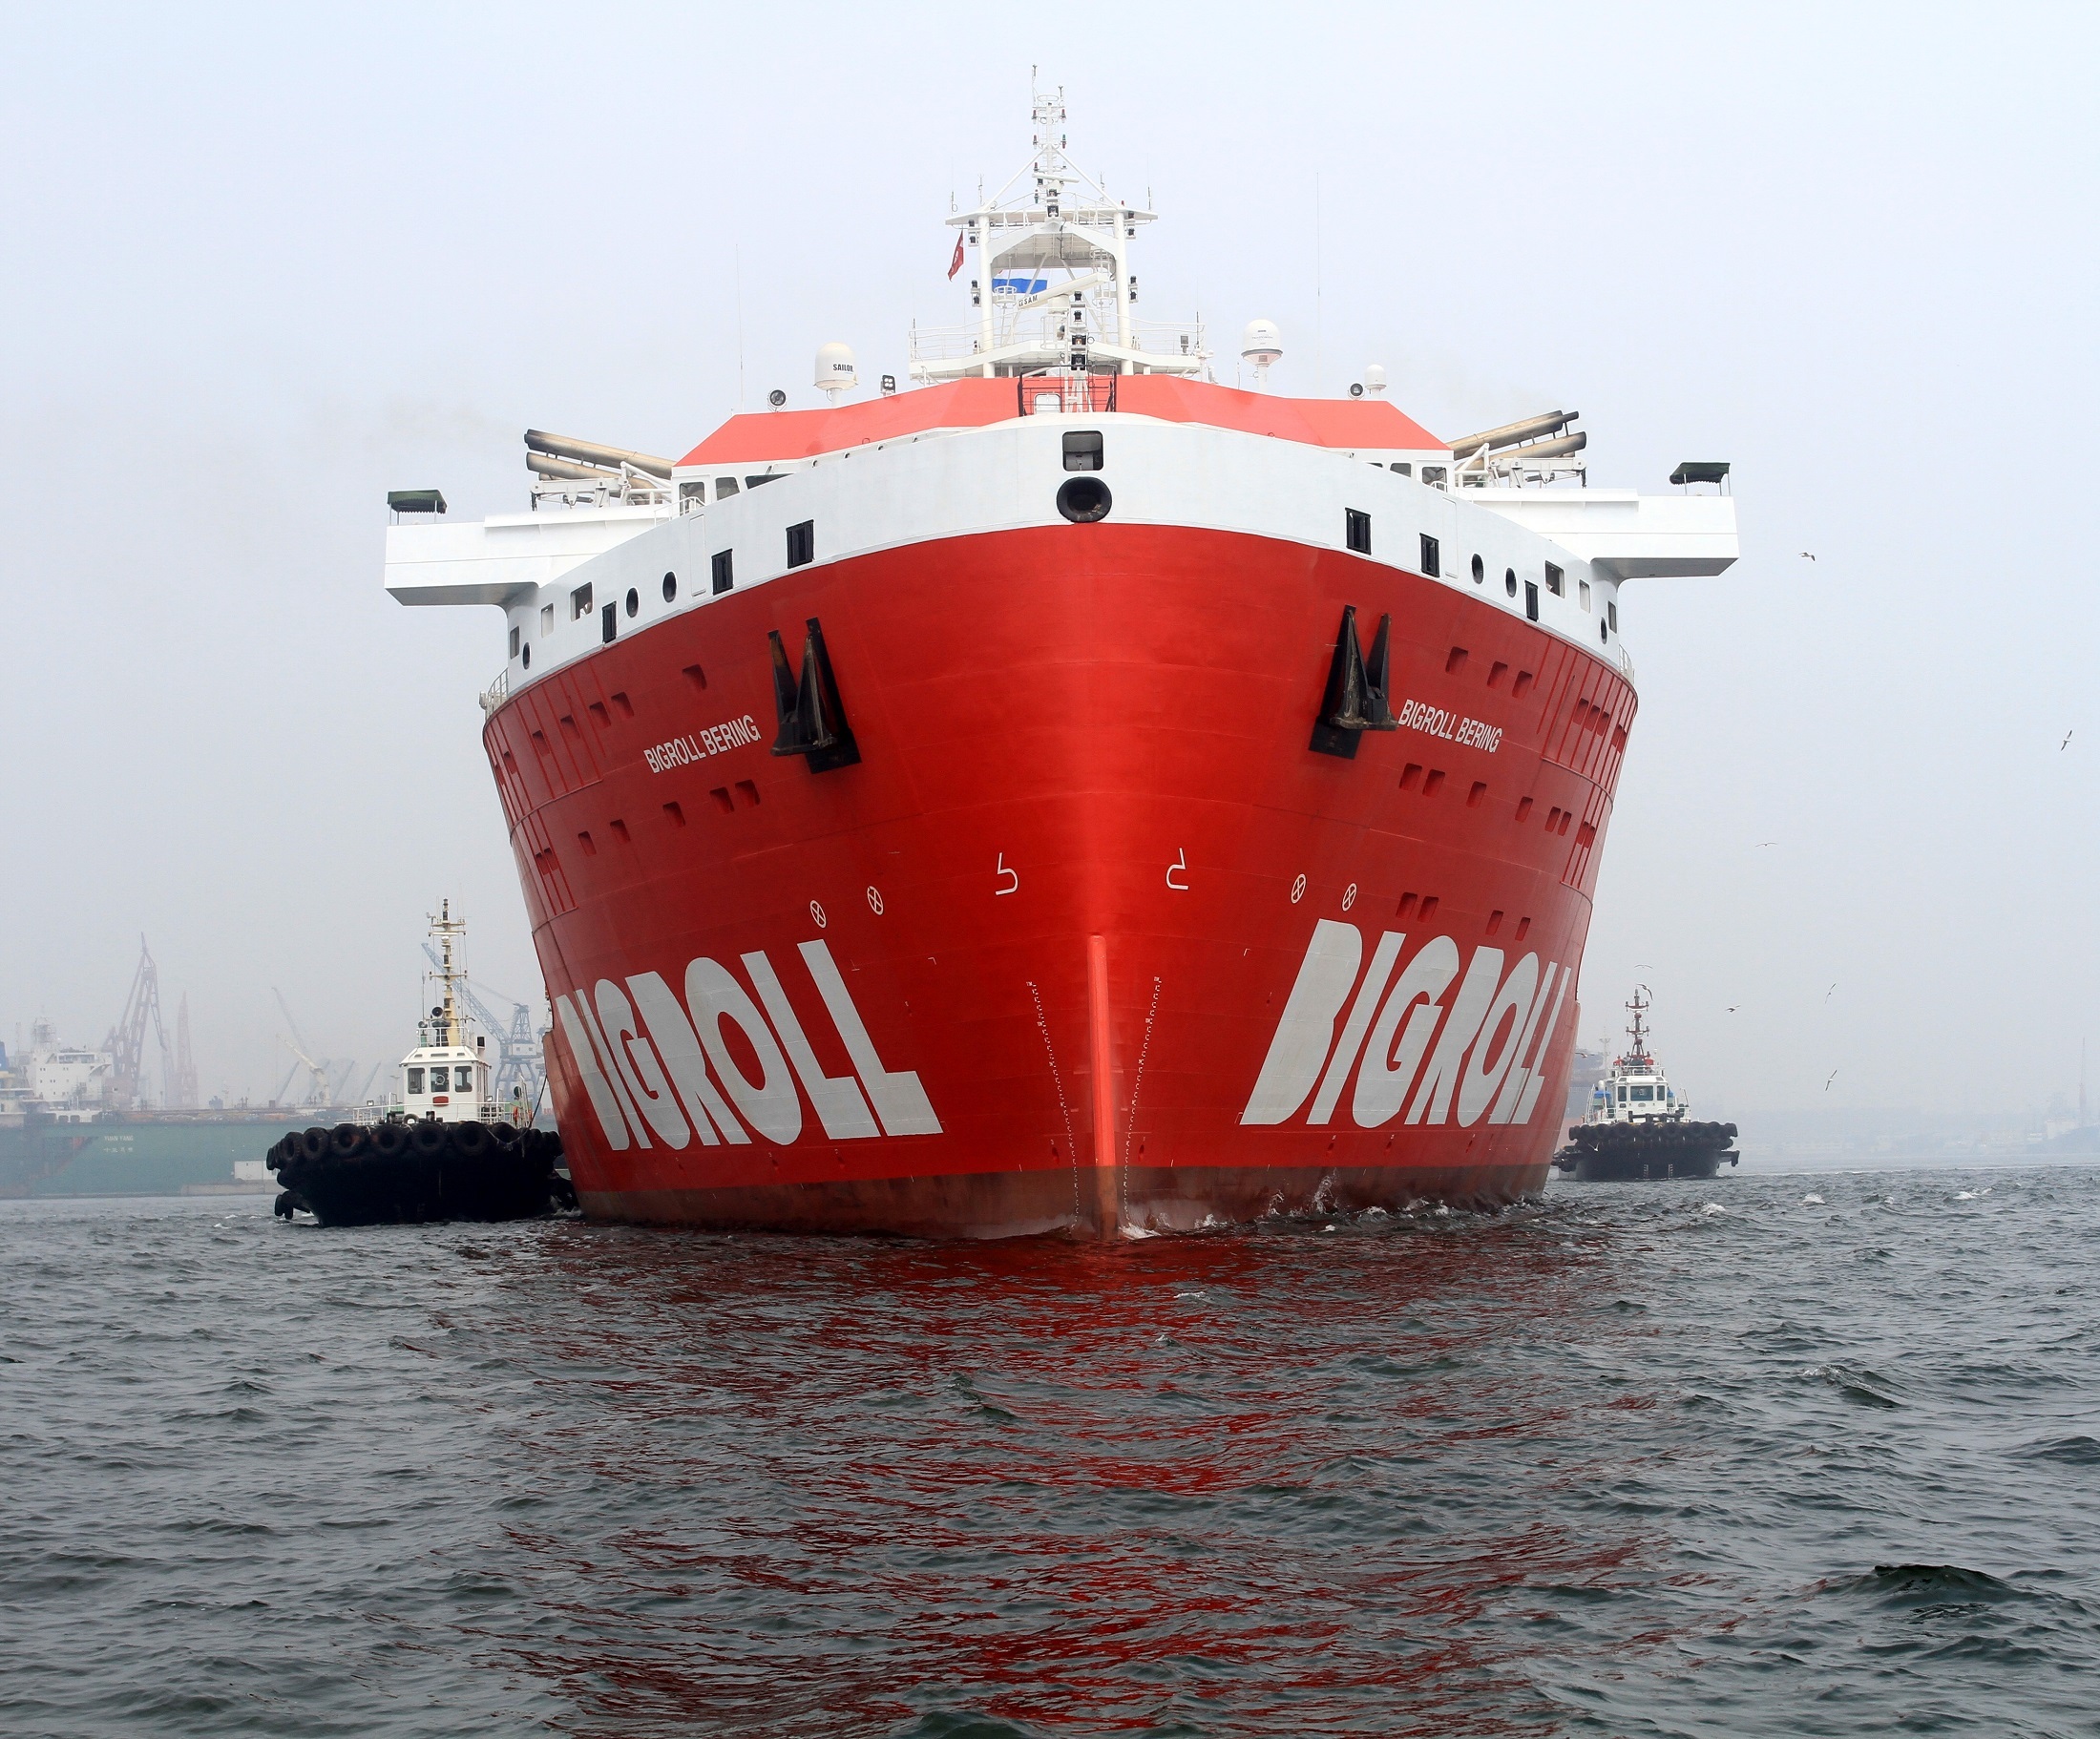 BigRoll Bering Module Carrier by DiancaP